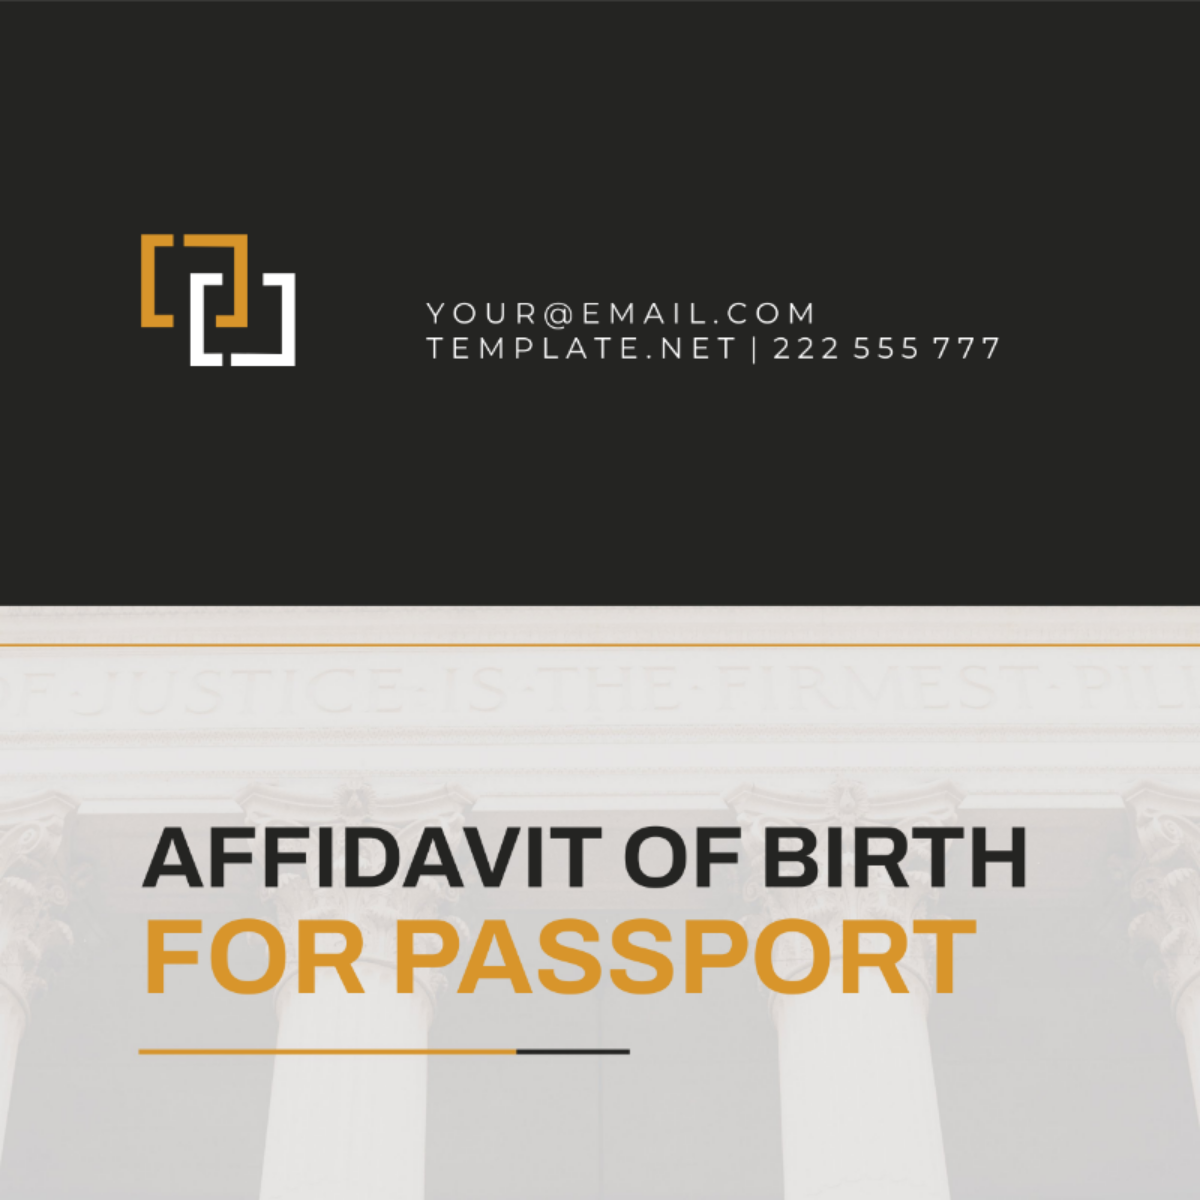 Affidavit of Birth for Passport Template